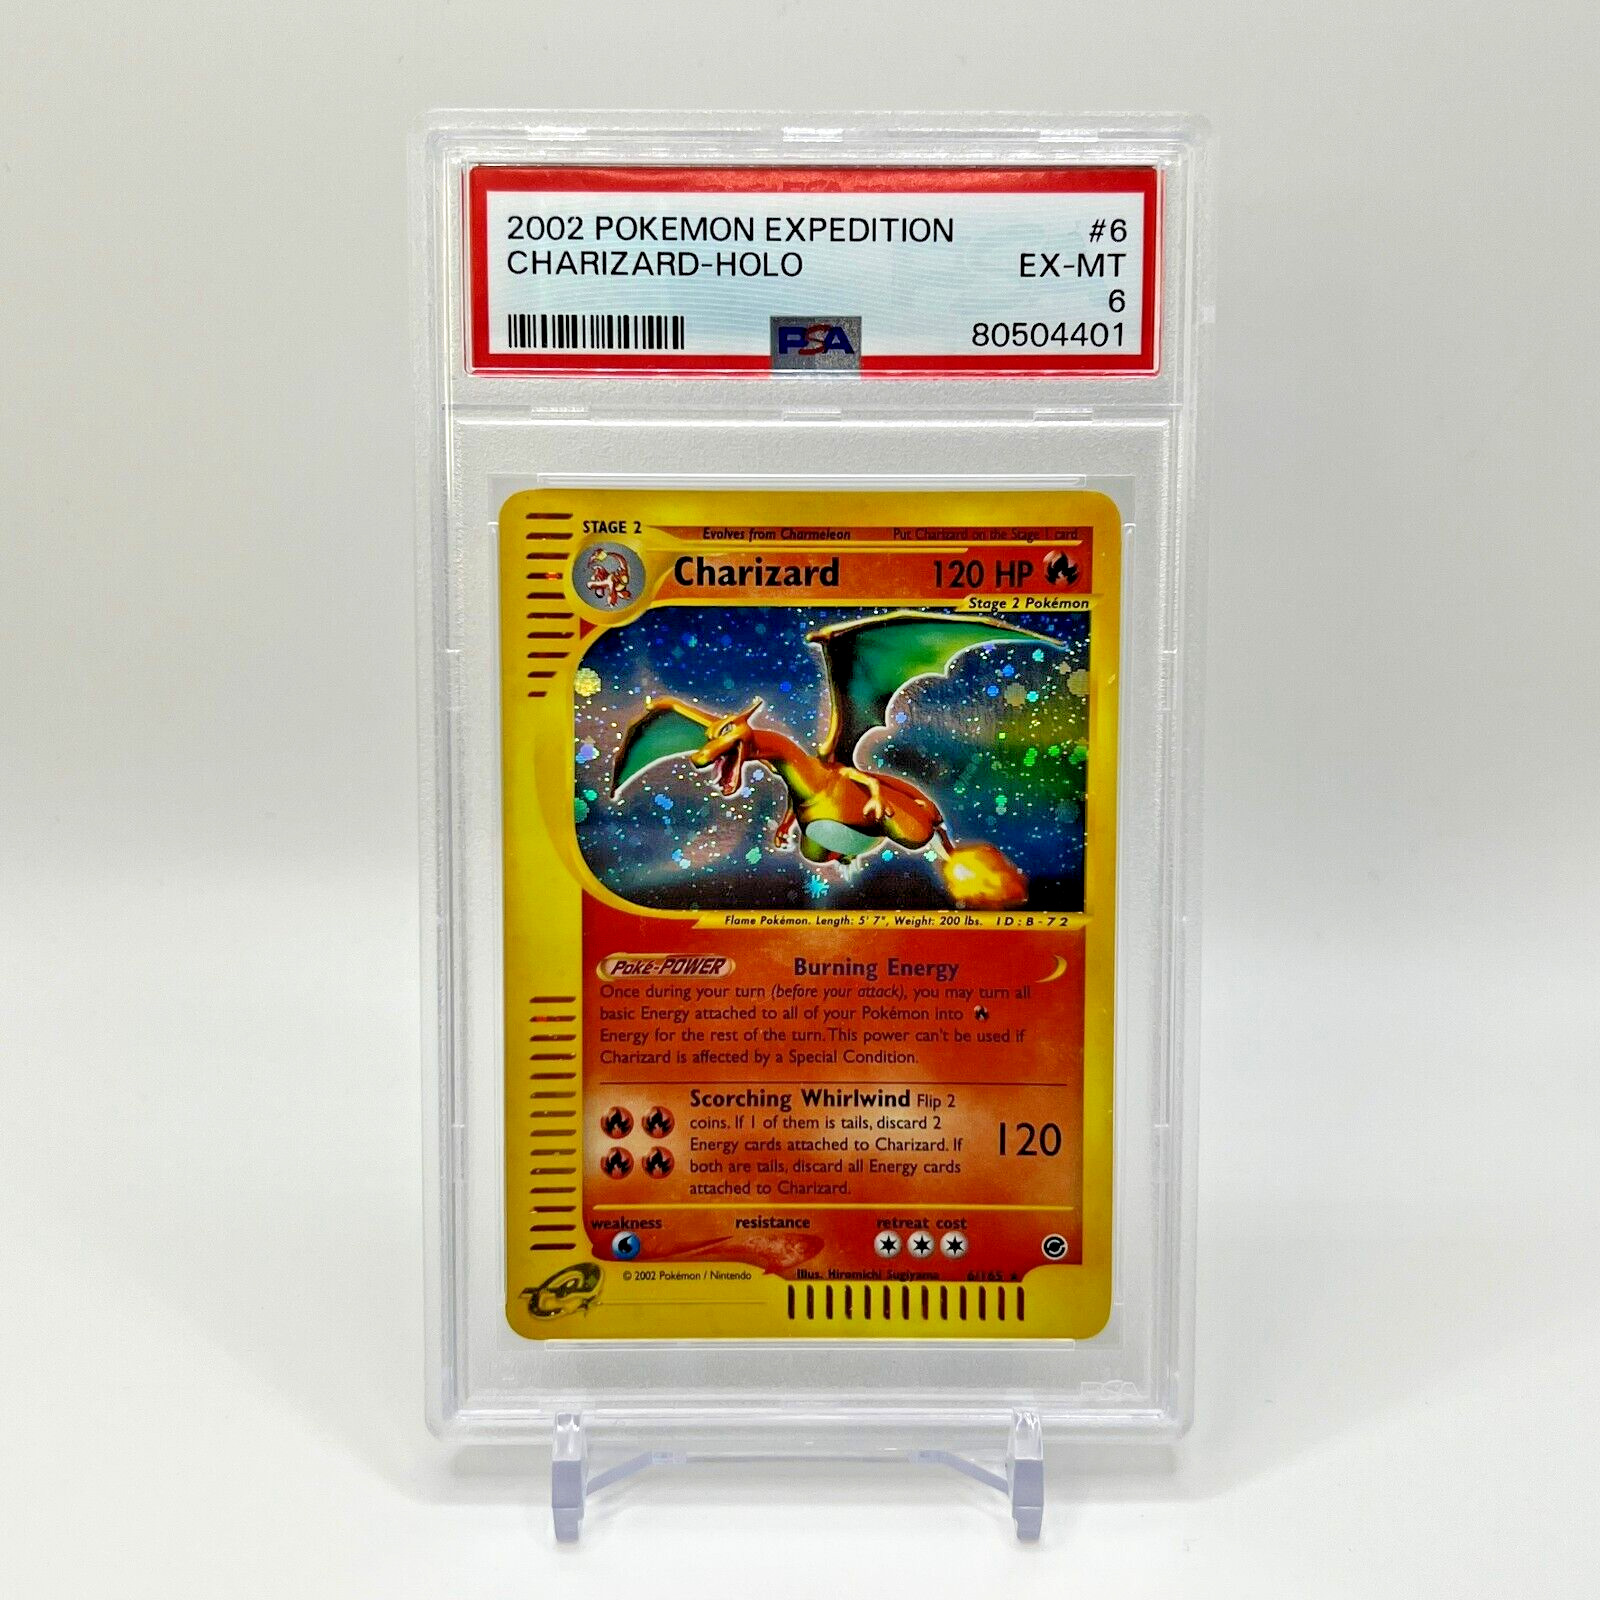 PSA 6 - Charizard 06/165 Holo Expedition - 2002 Pokemon Card - EX MINT